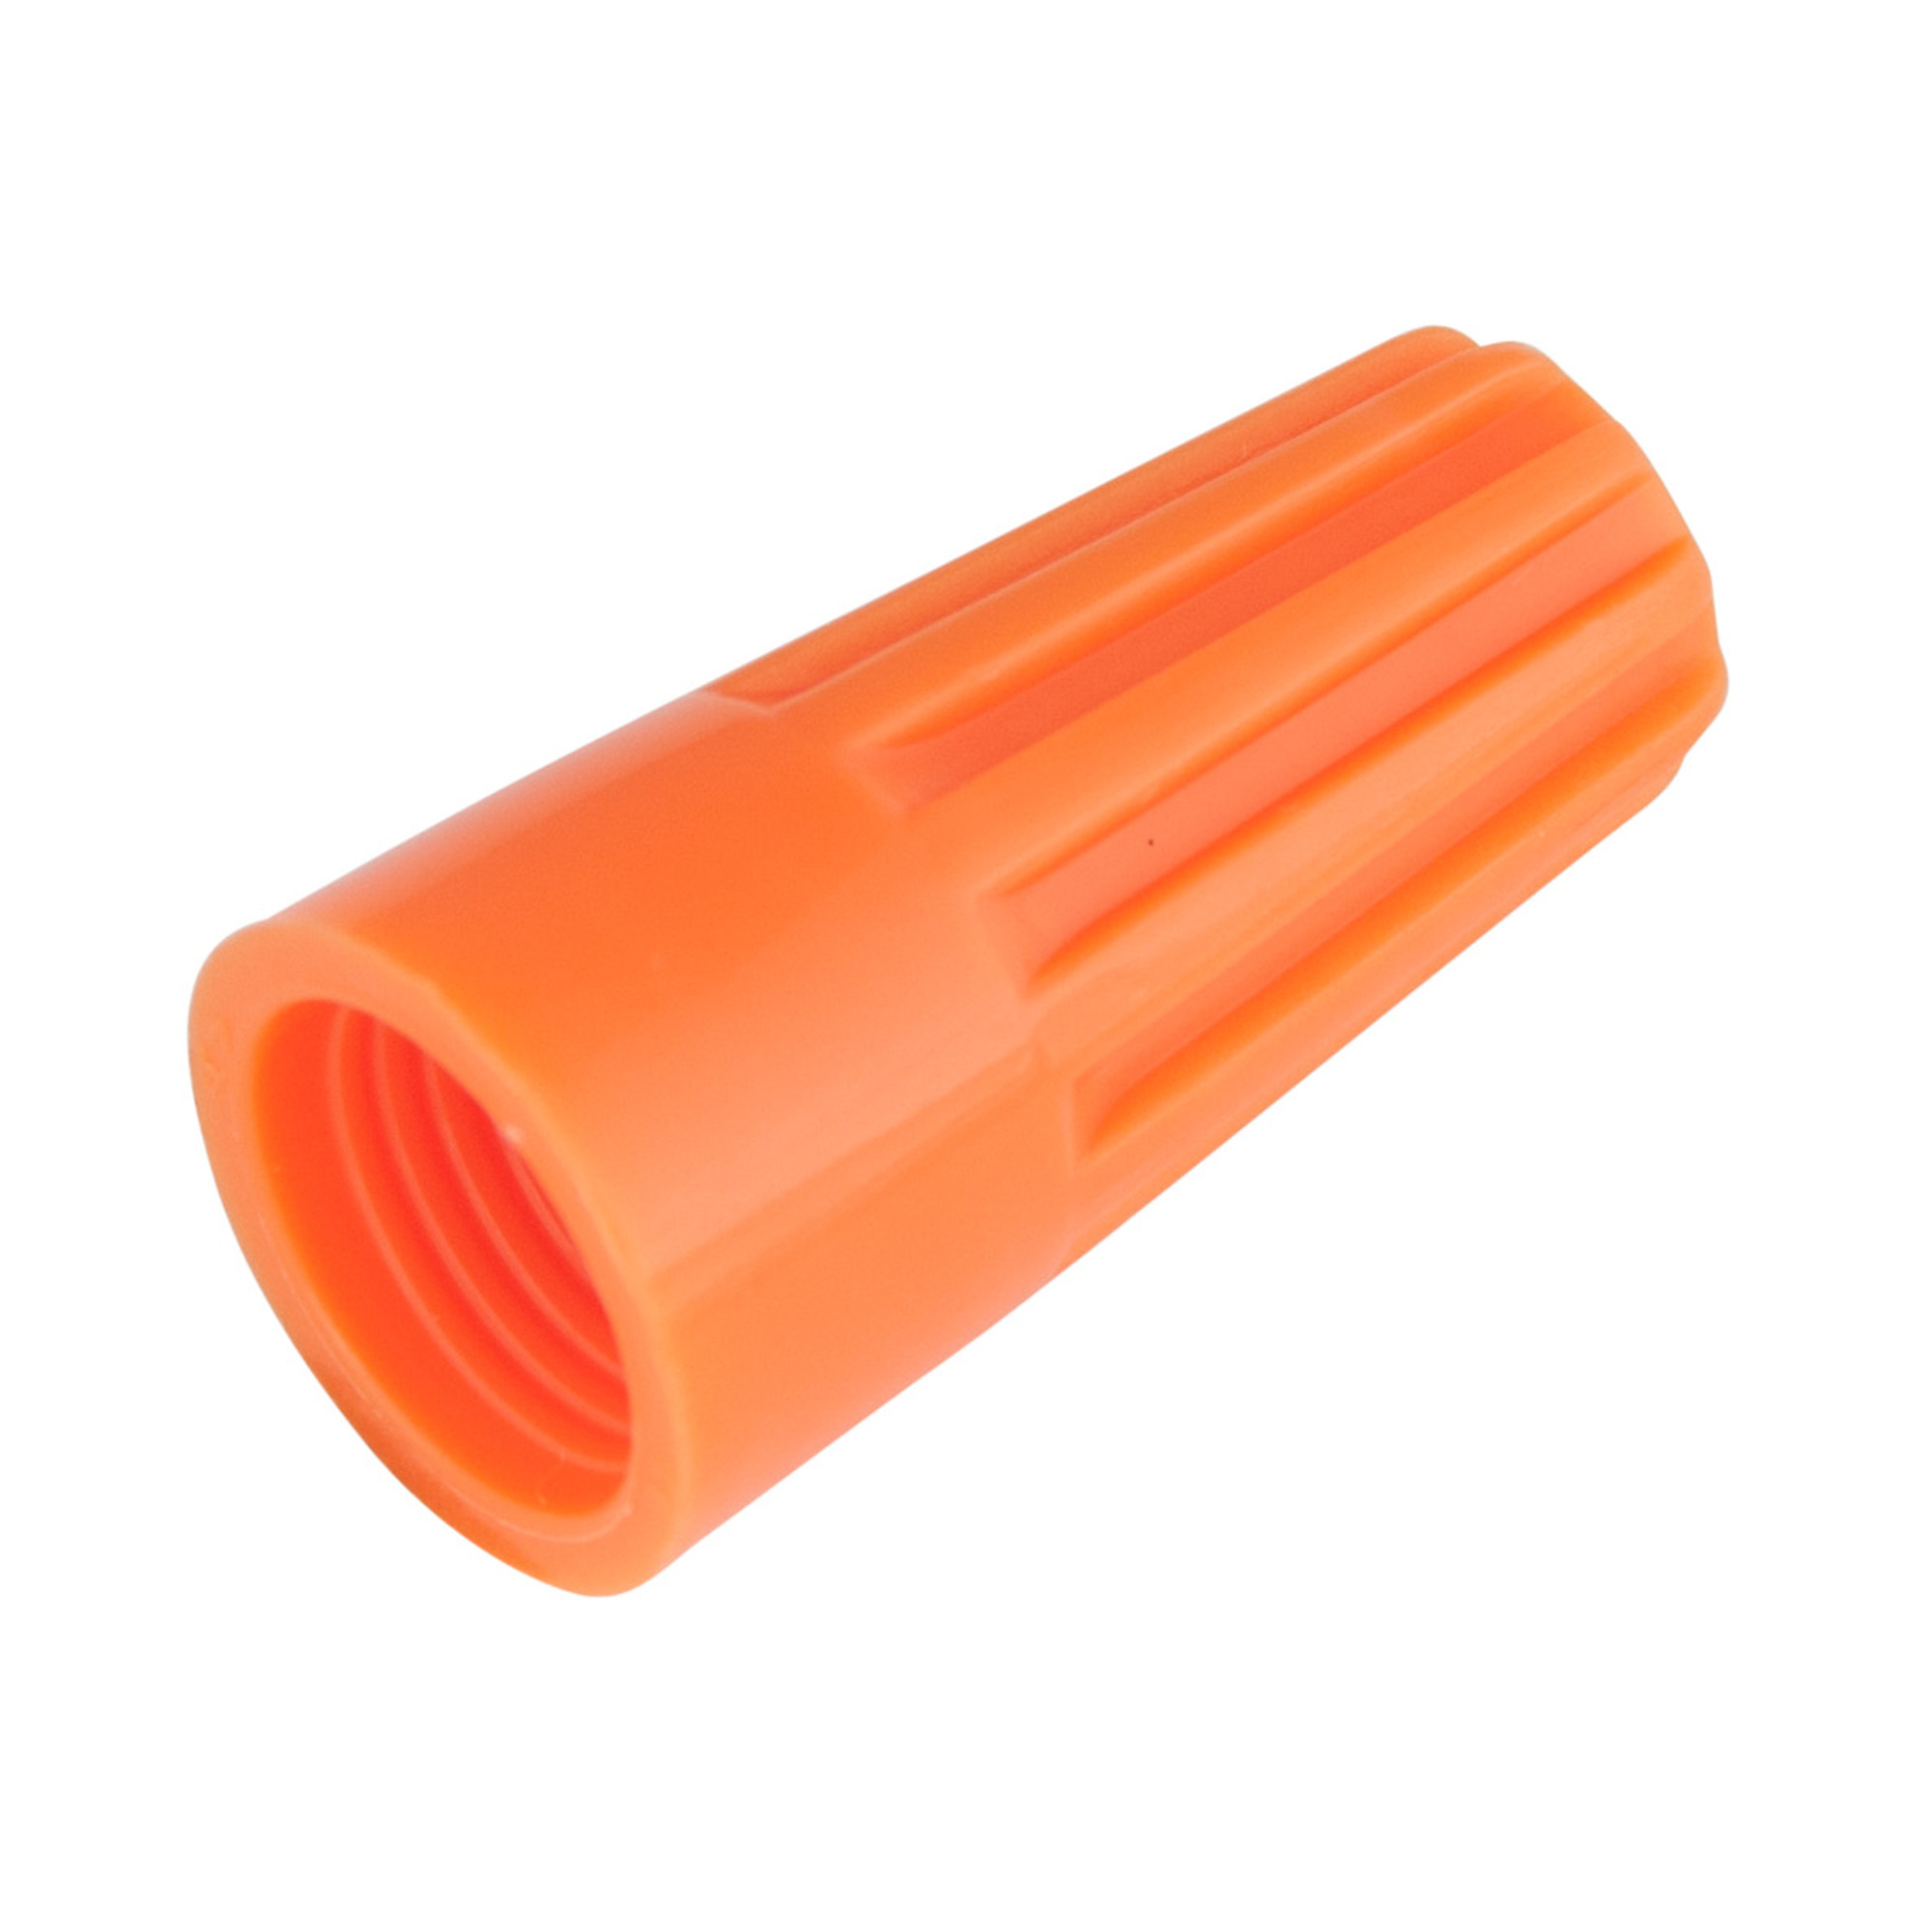 10000 Orange Twist-On Wire GARD Connector Conical nuts 22-14 Gauge Barrel Screw 